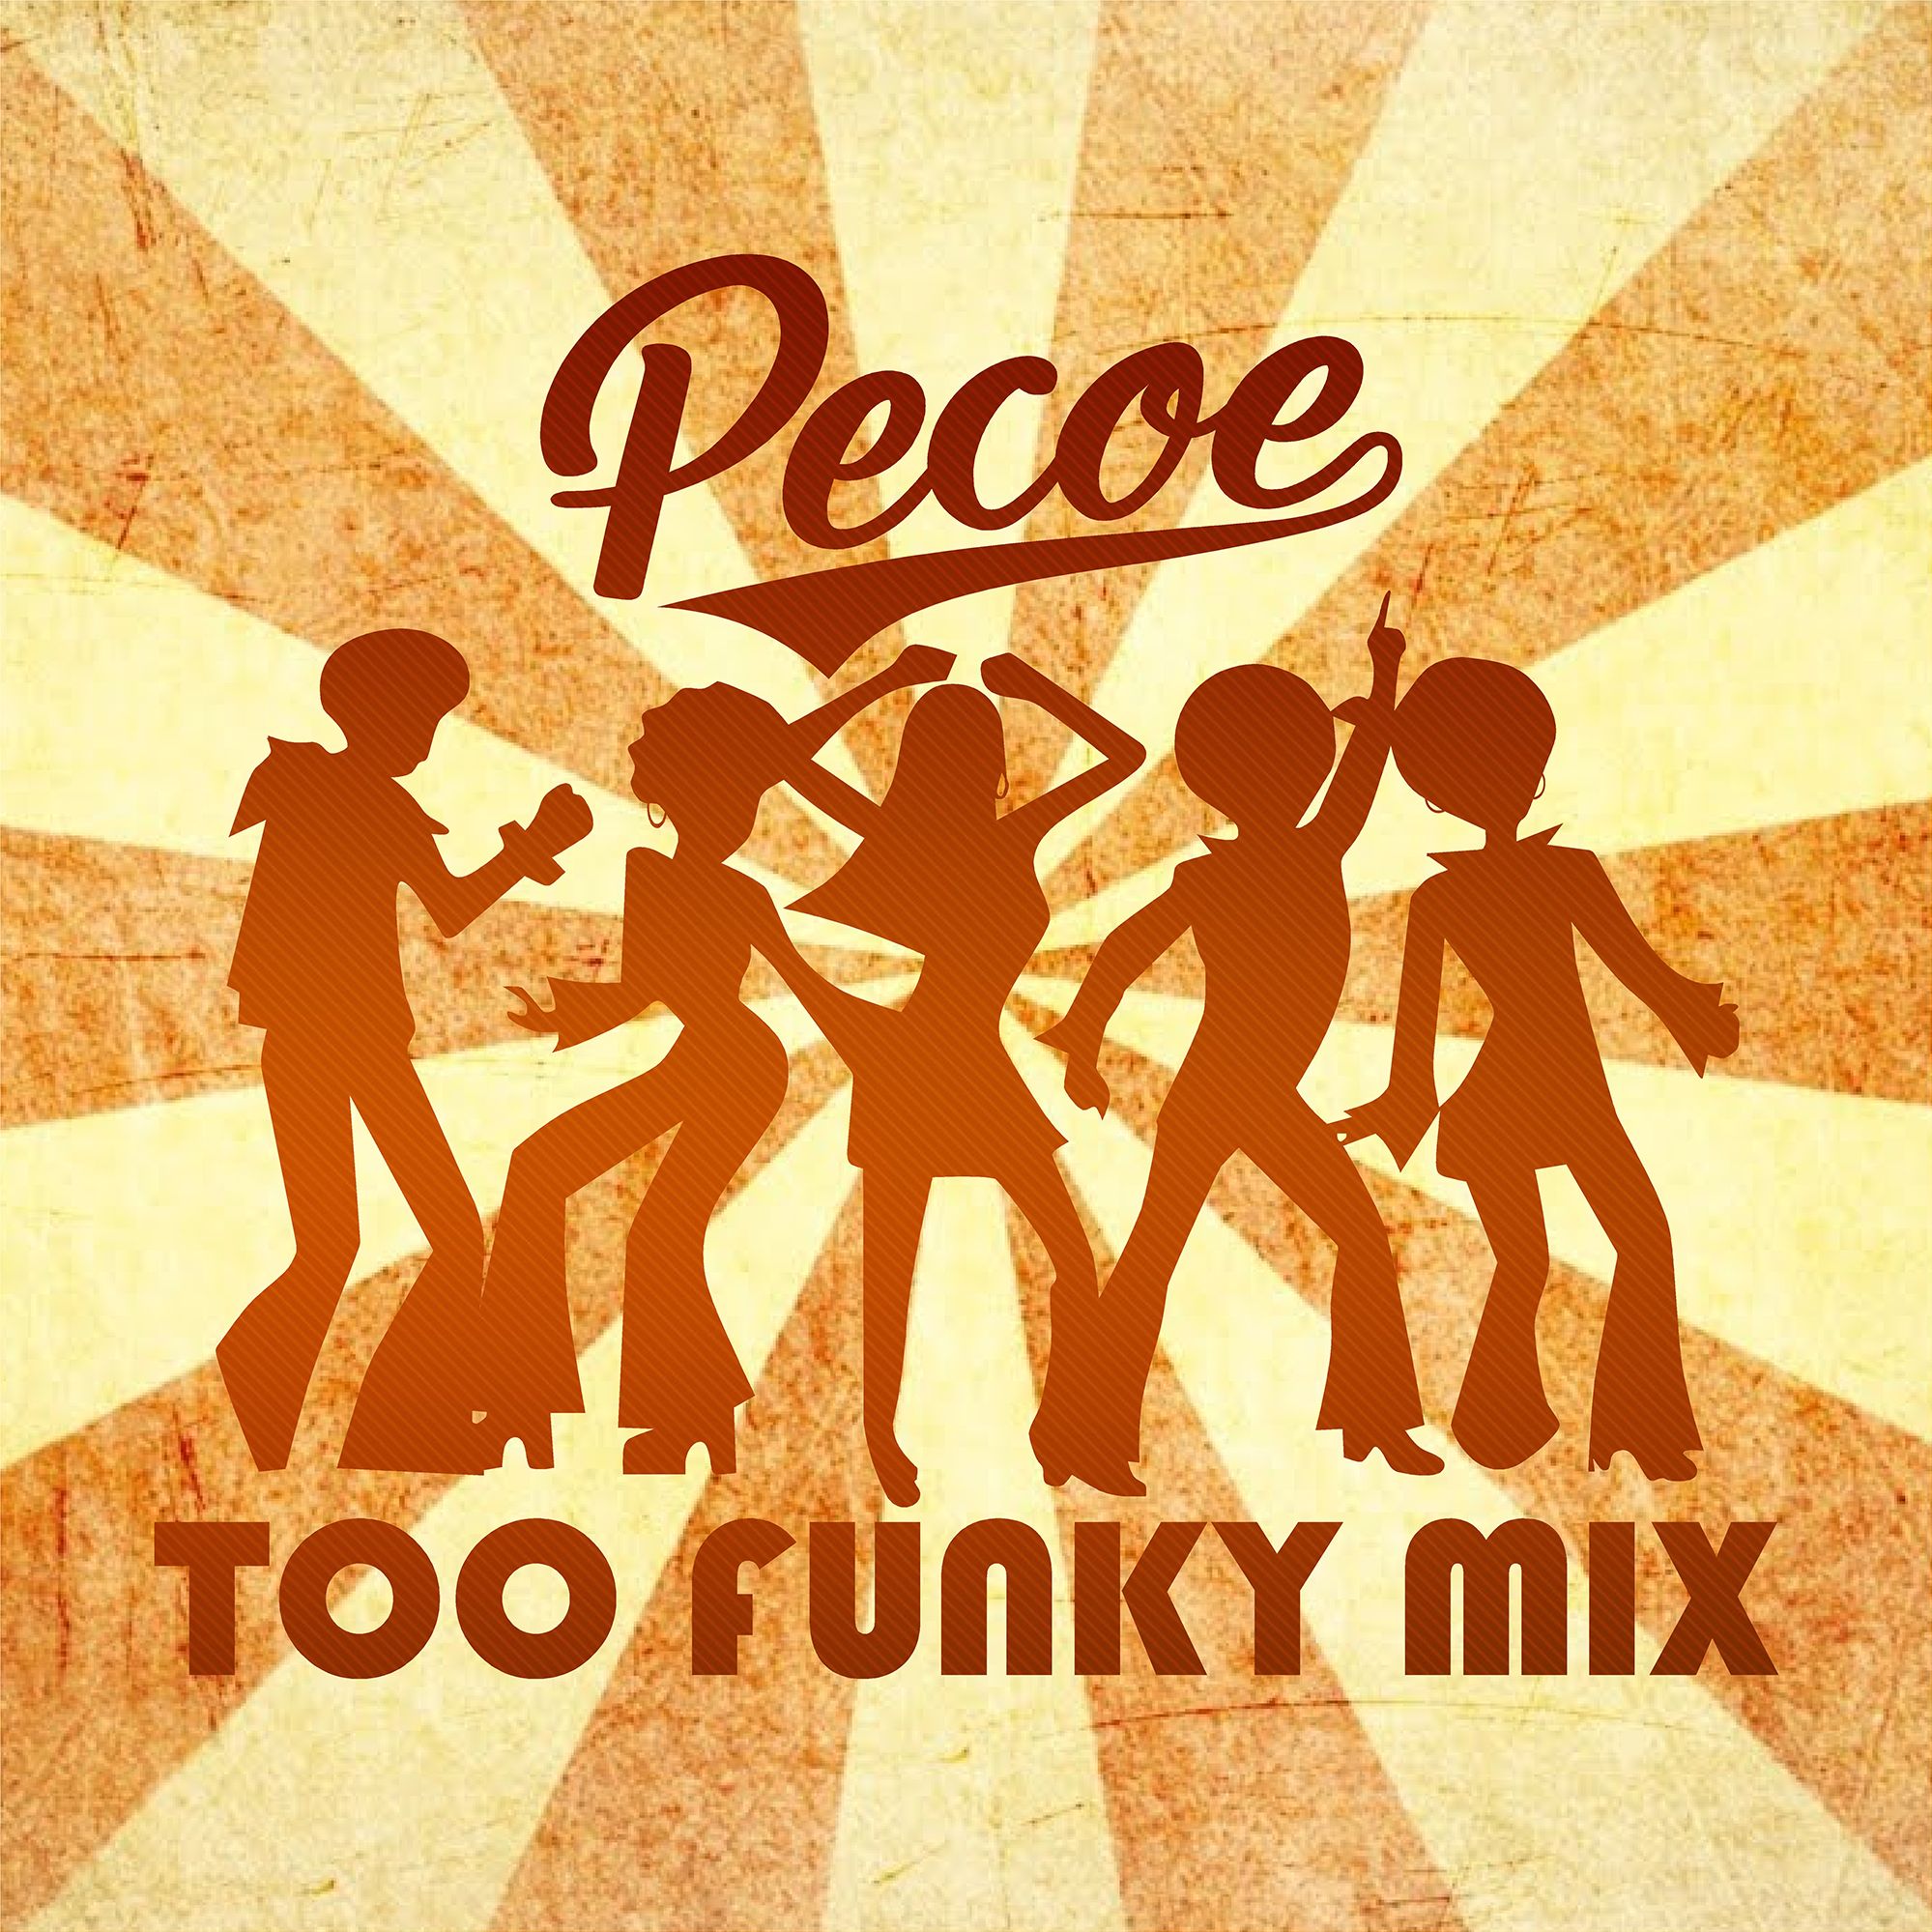 Descarca Pecoe - Too Funky Mix